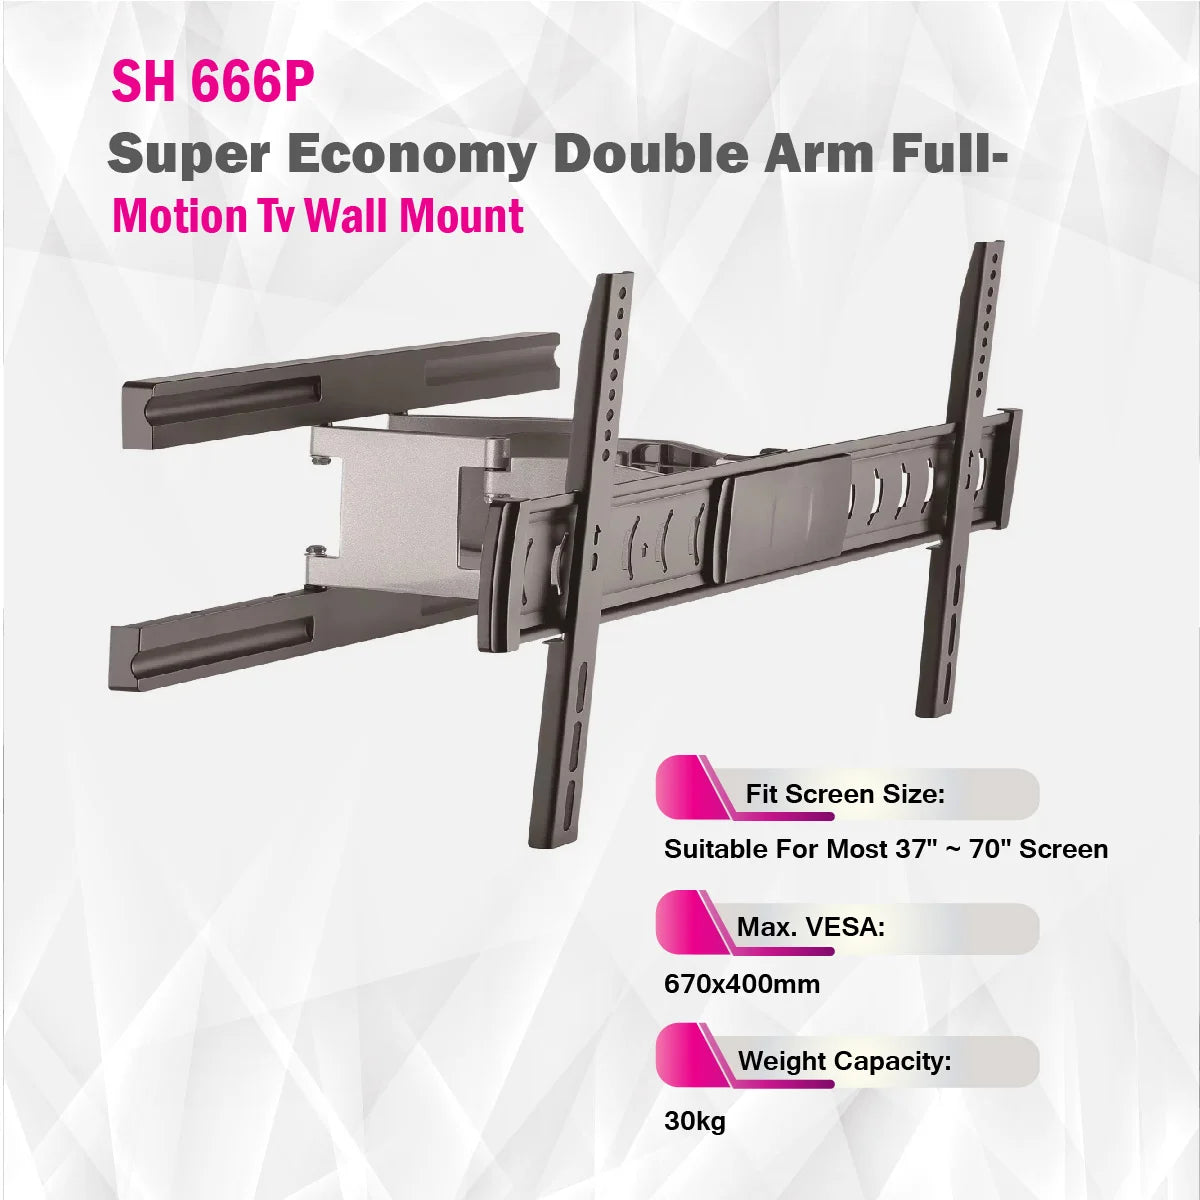 SkillTech - SH 666P - Super Economy Double Arm Full-Motion Tv Wall Mount